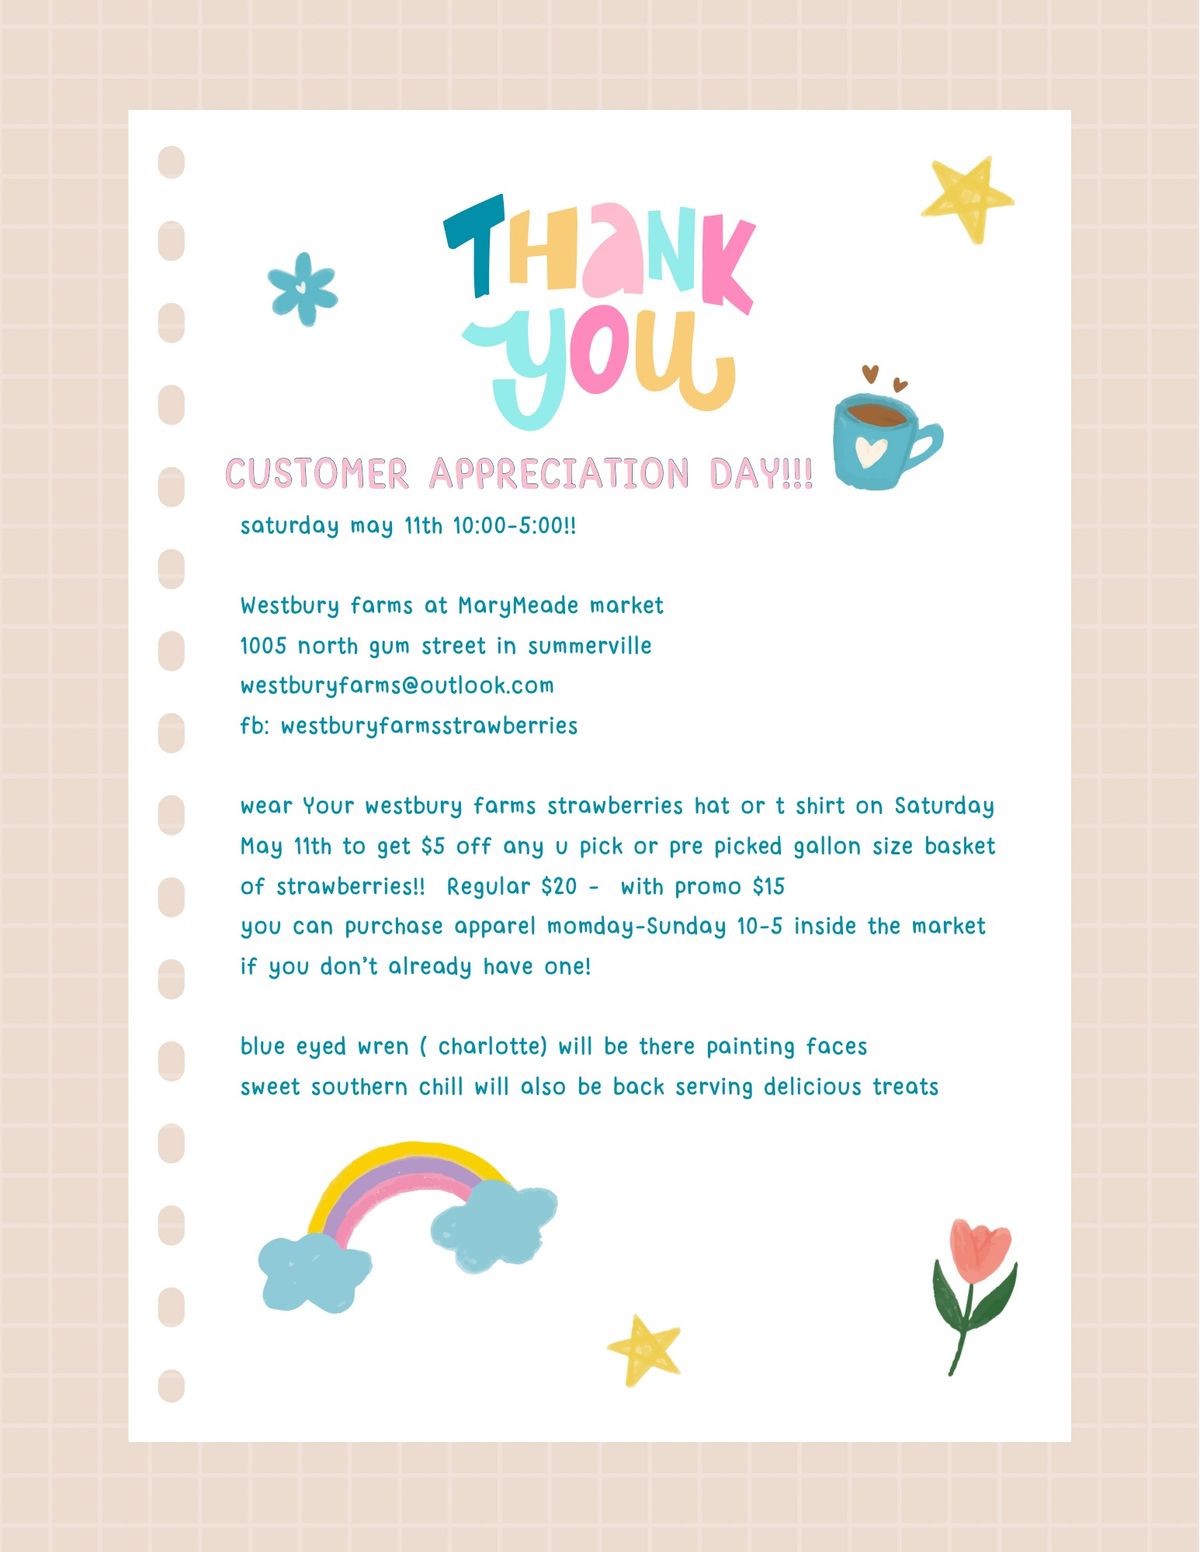 Customer appreciation day!  